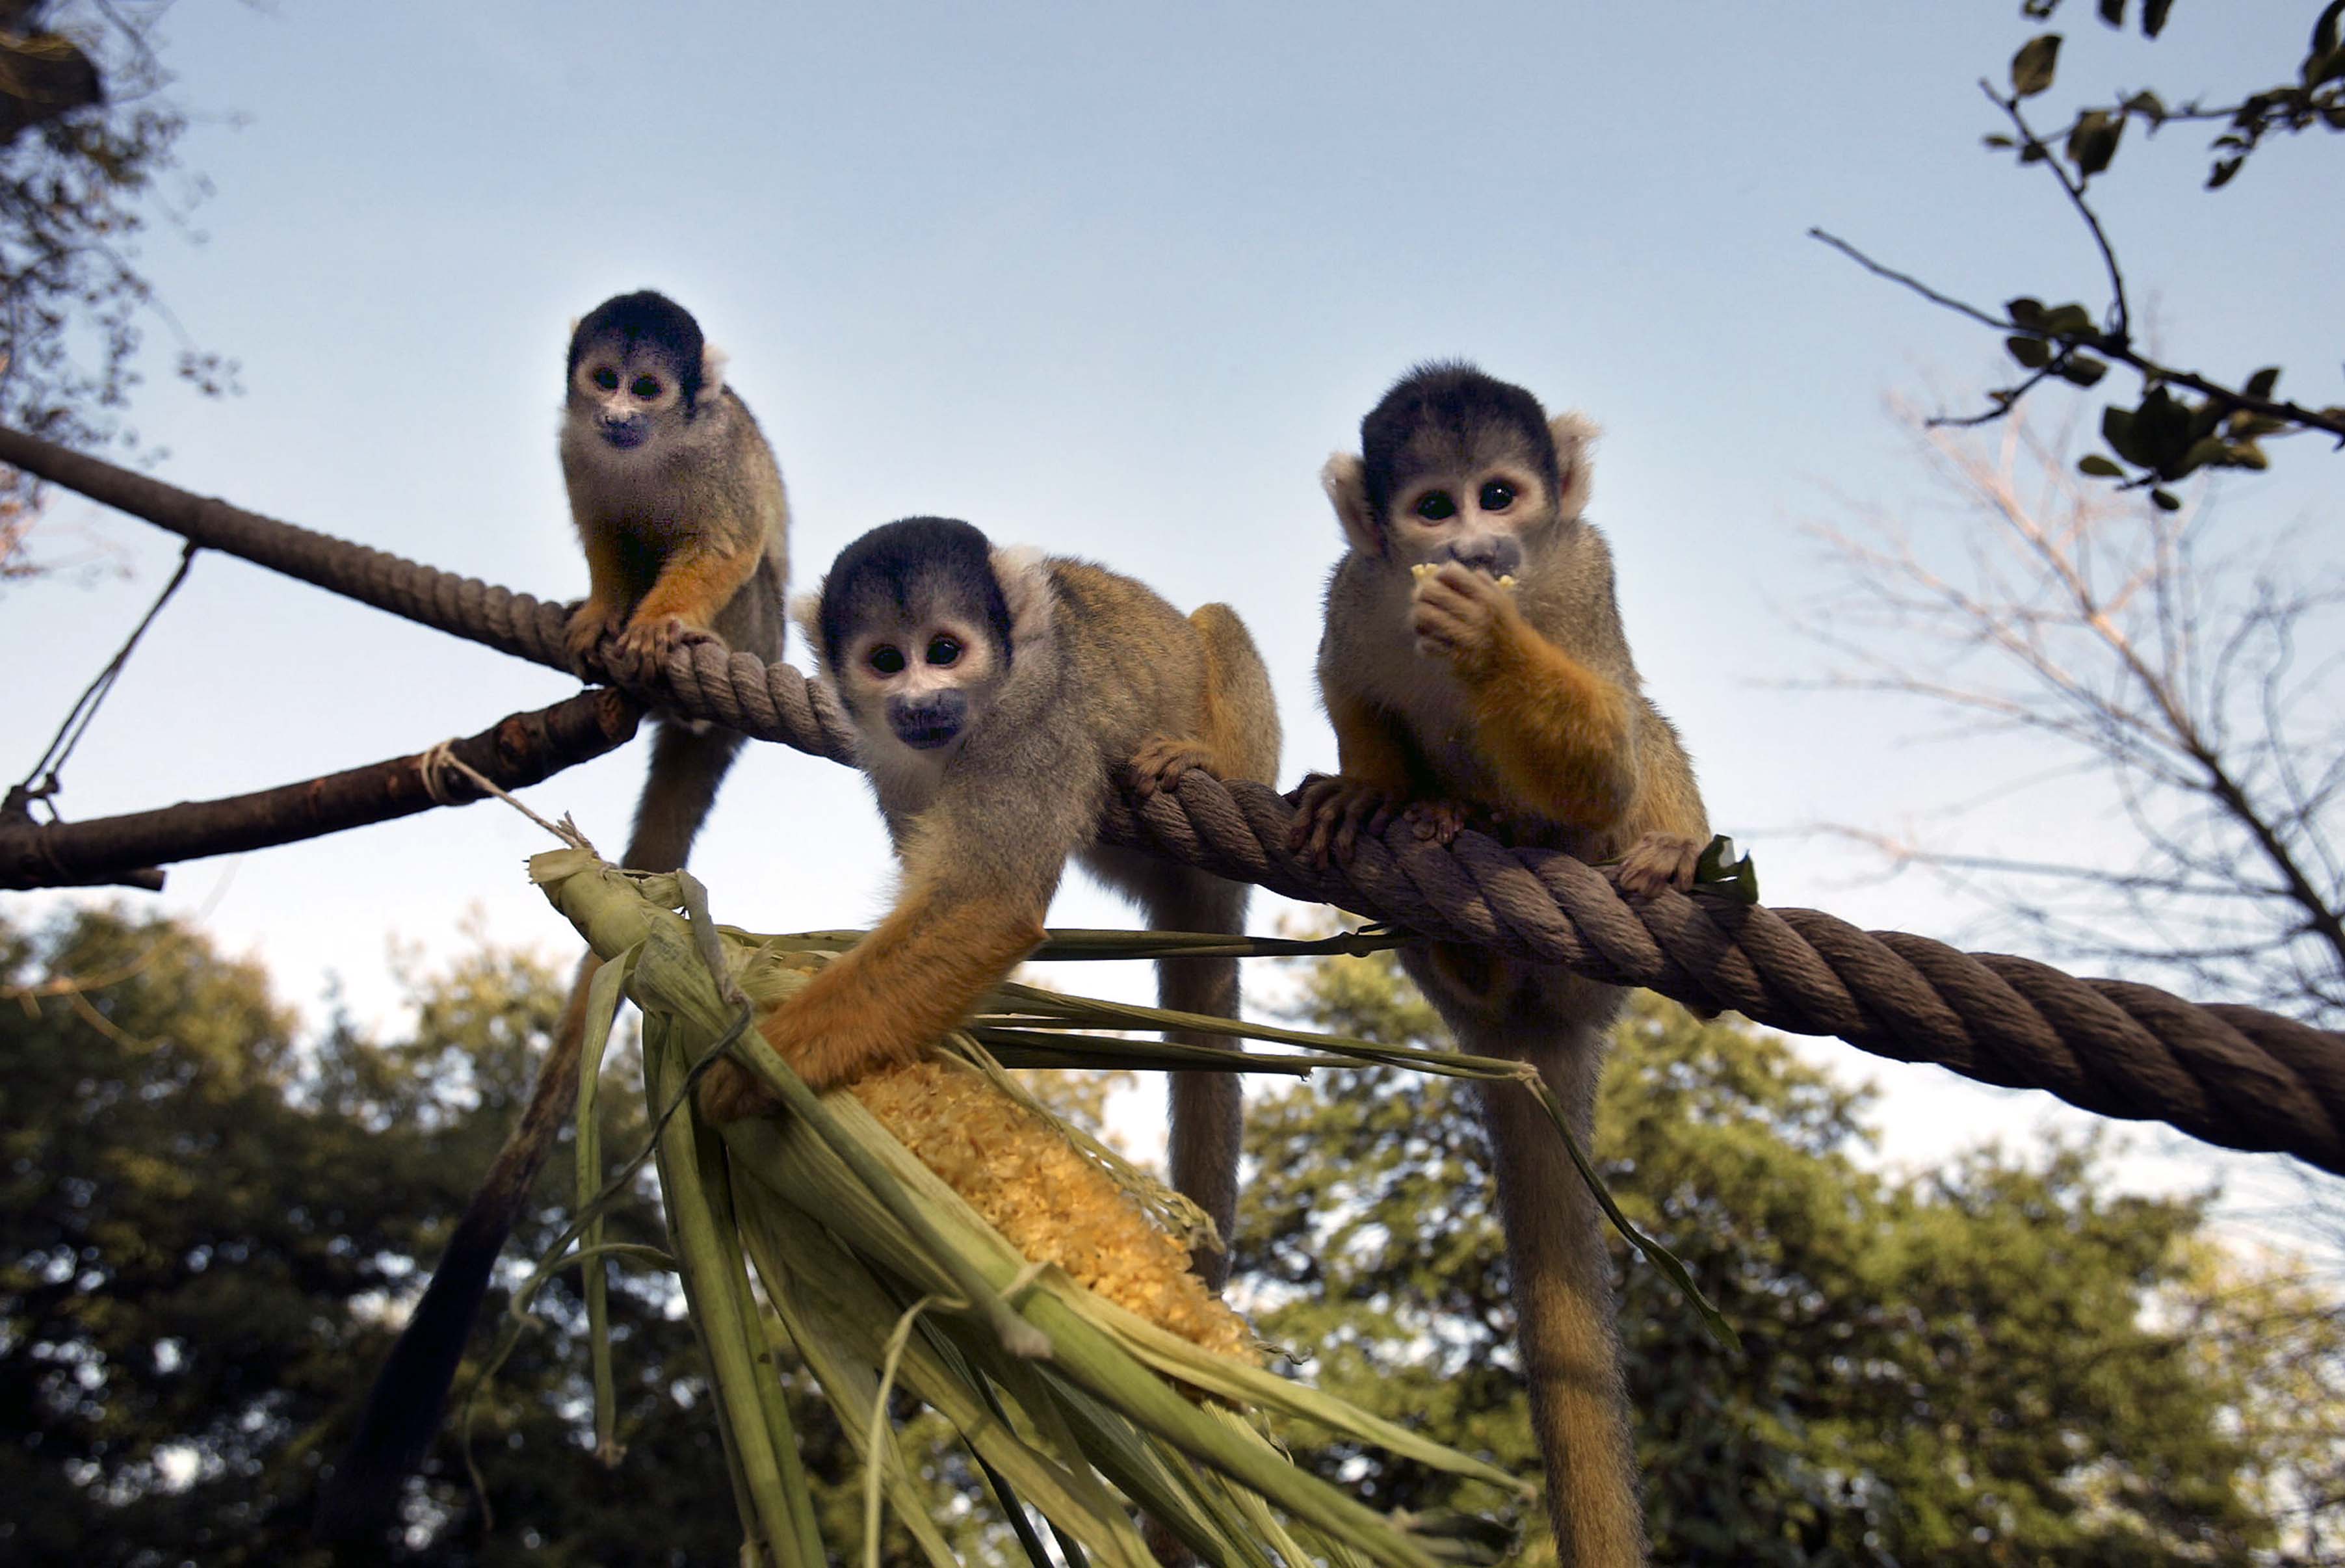 Zsl London Zoo Squirrel Monkey 1502362305 